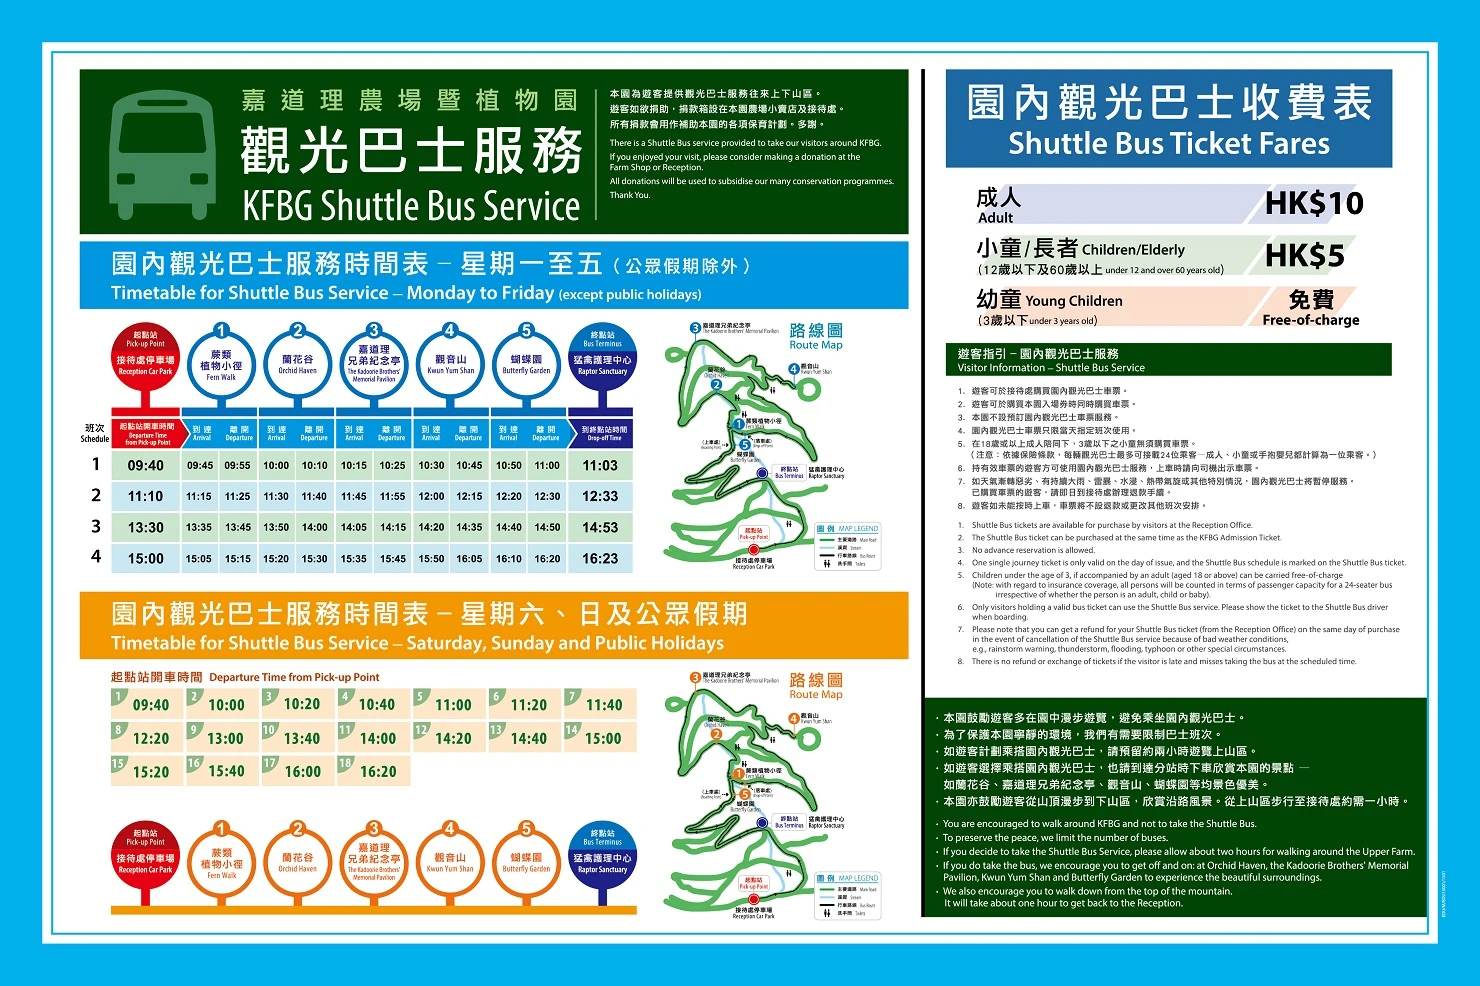 Shuttle Bus price, route and schedule at Kadoori Farm Botanic Garden, Hong Kong